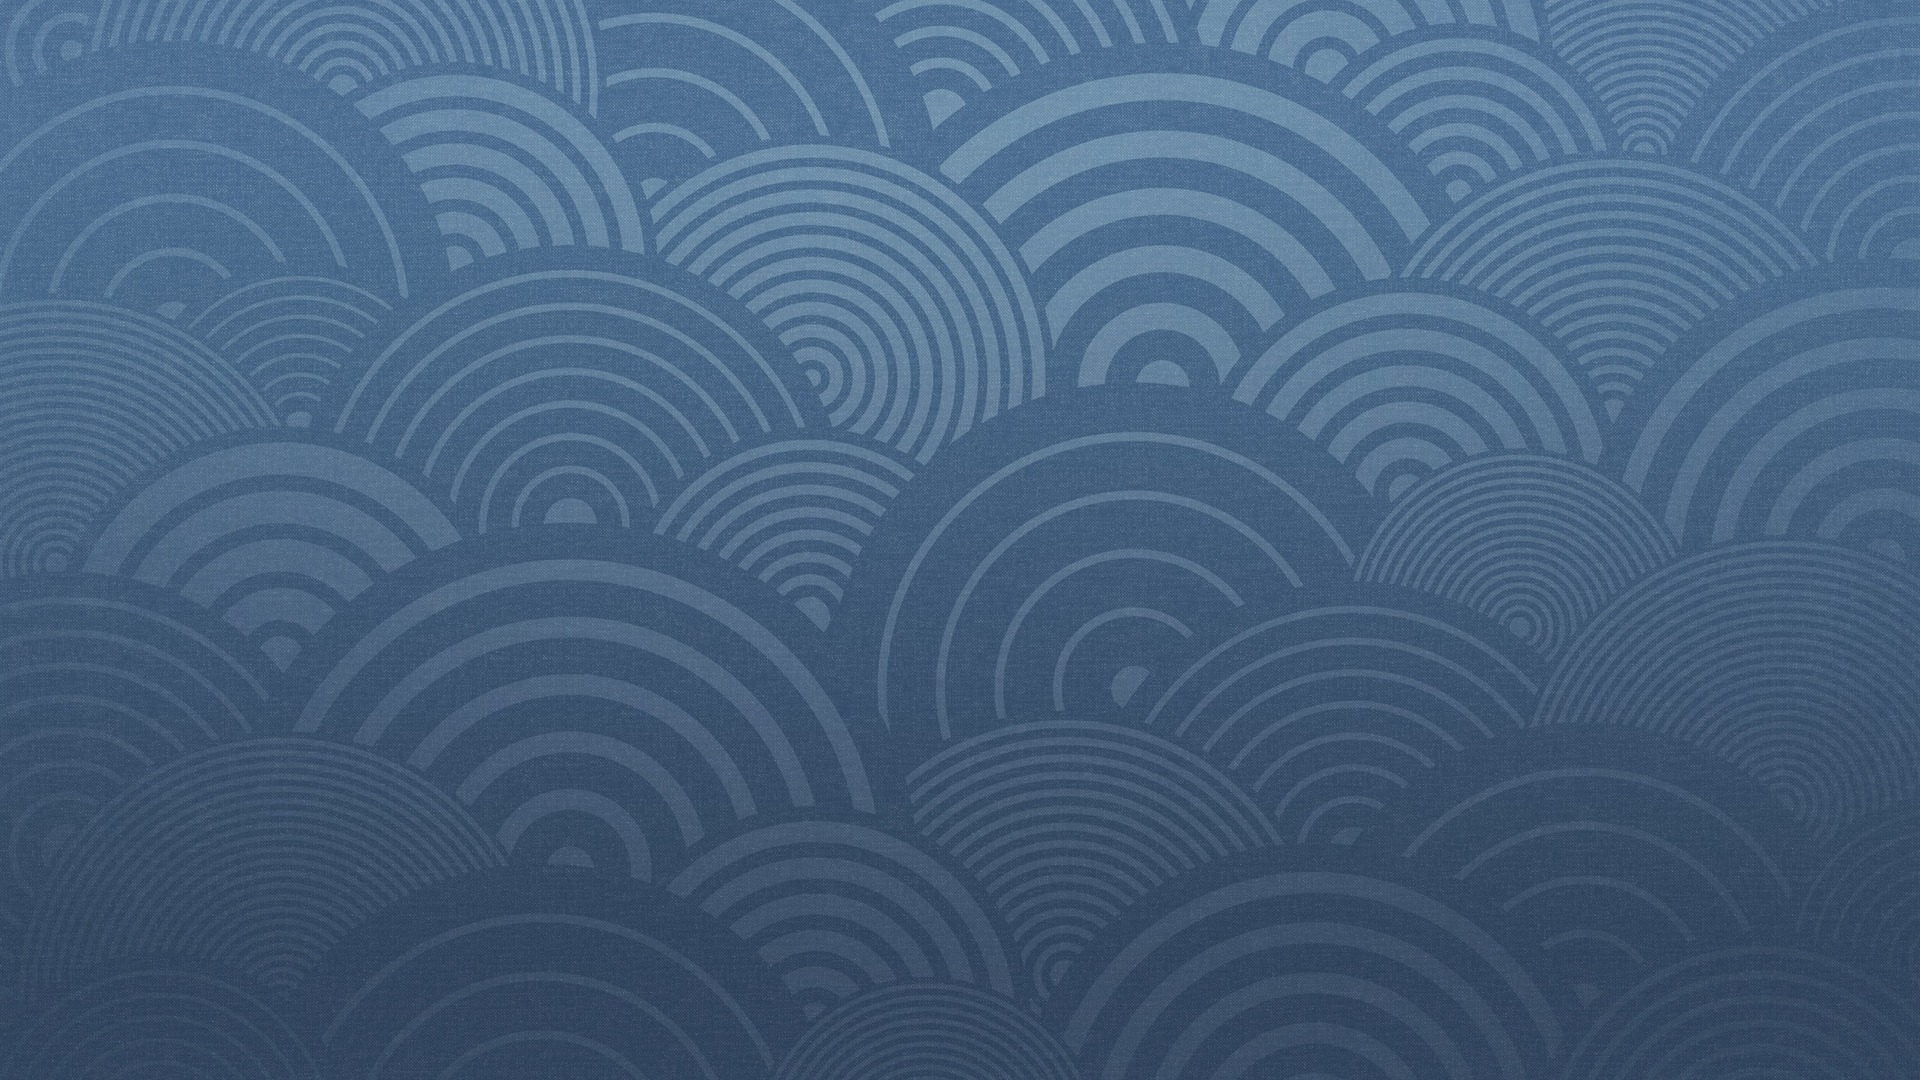 Circles Wind Decorative Background Mac Os Wallpaper 1920x1080